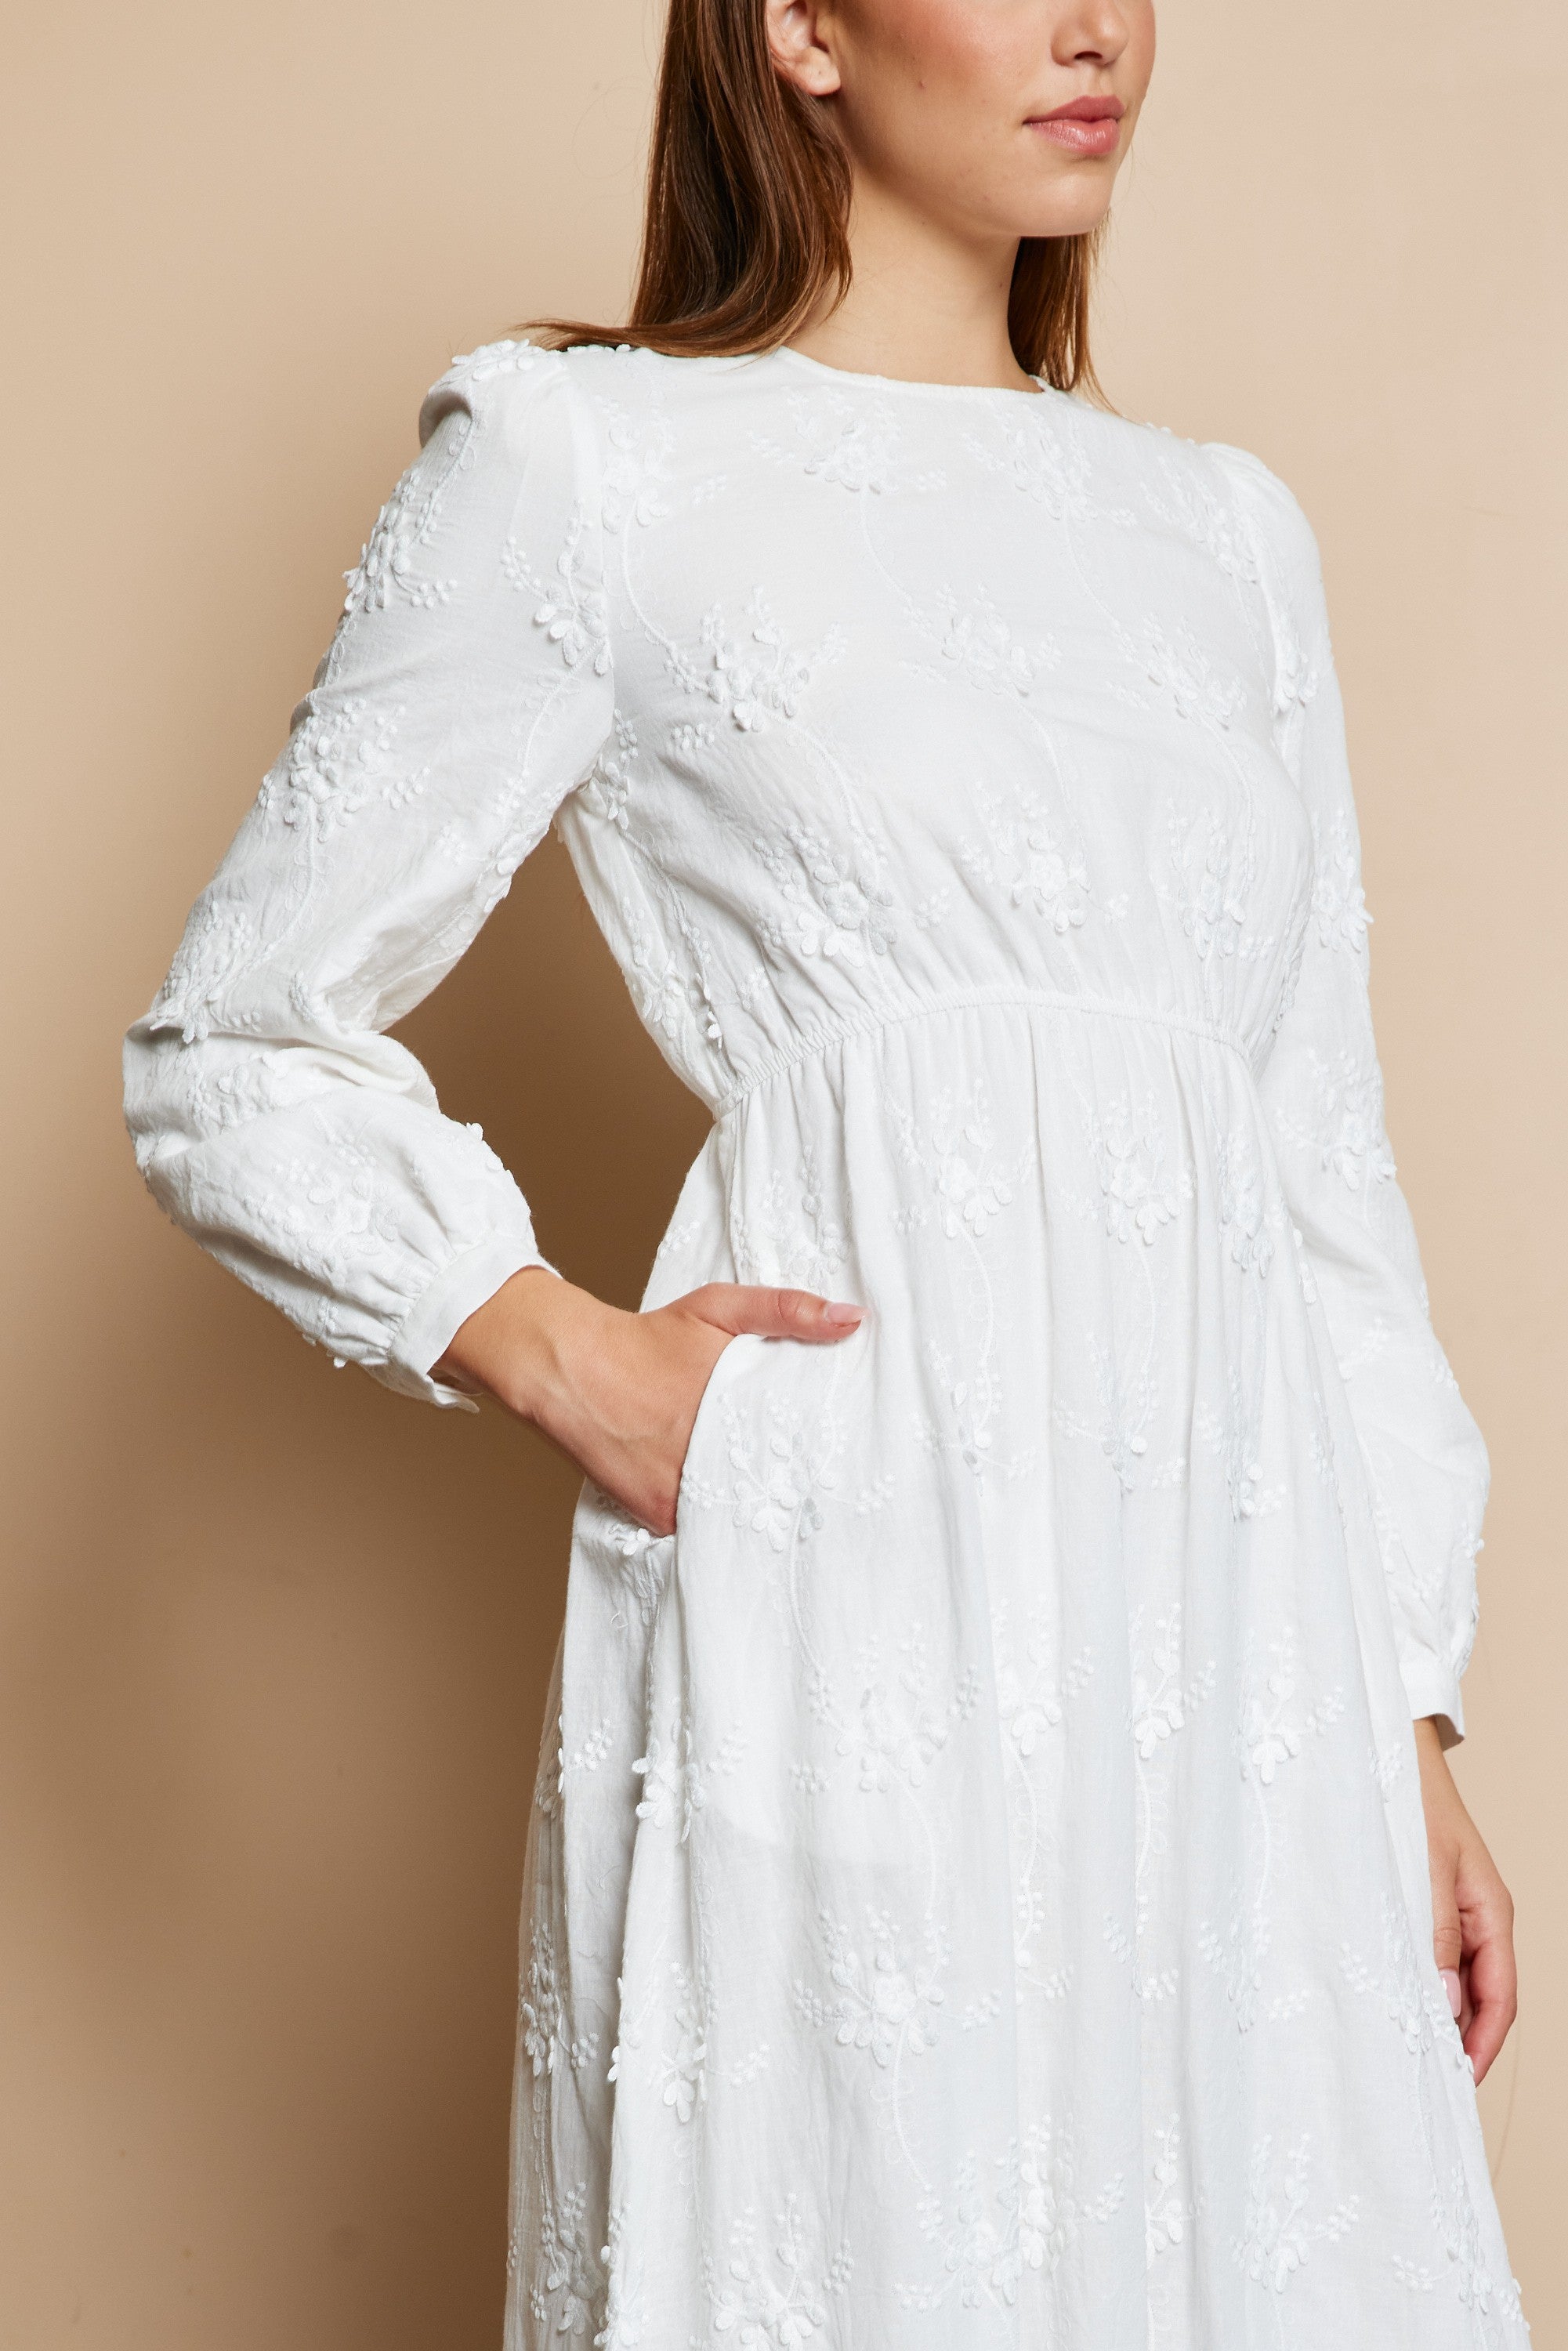 Brandi Temple Dress in White